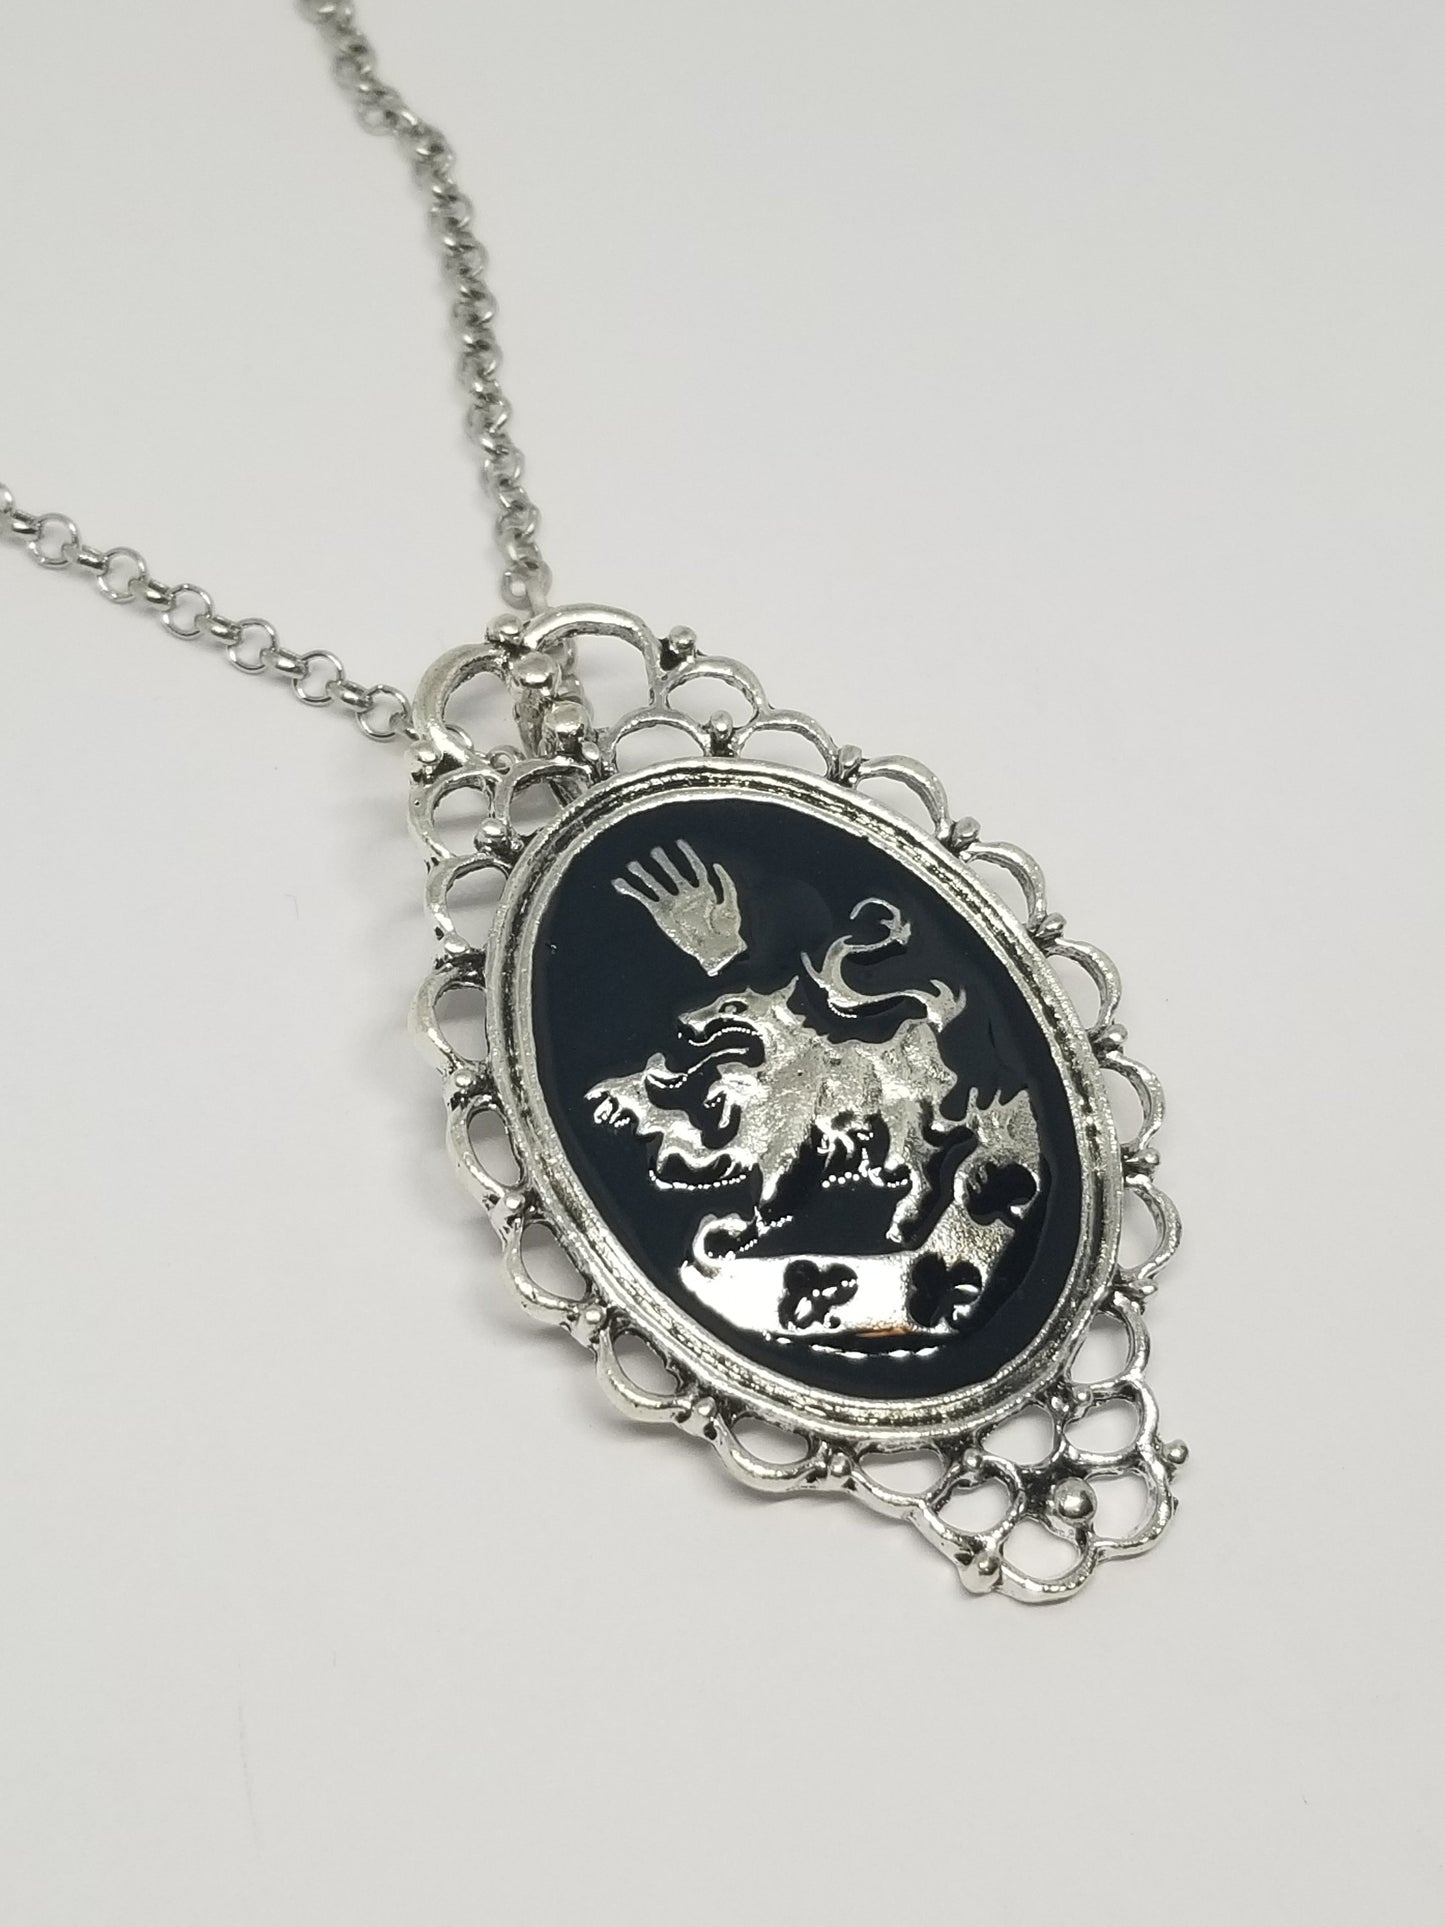 Vampire Diaries inspired black silver pendant necklace